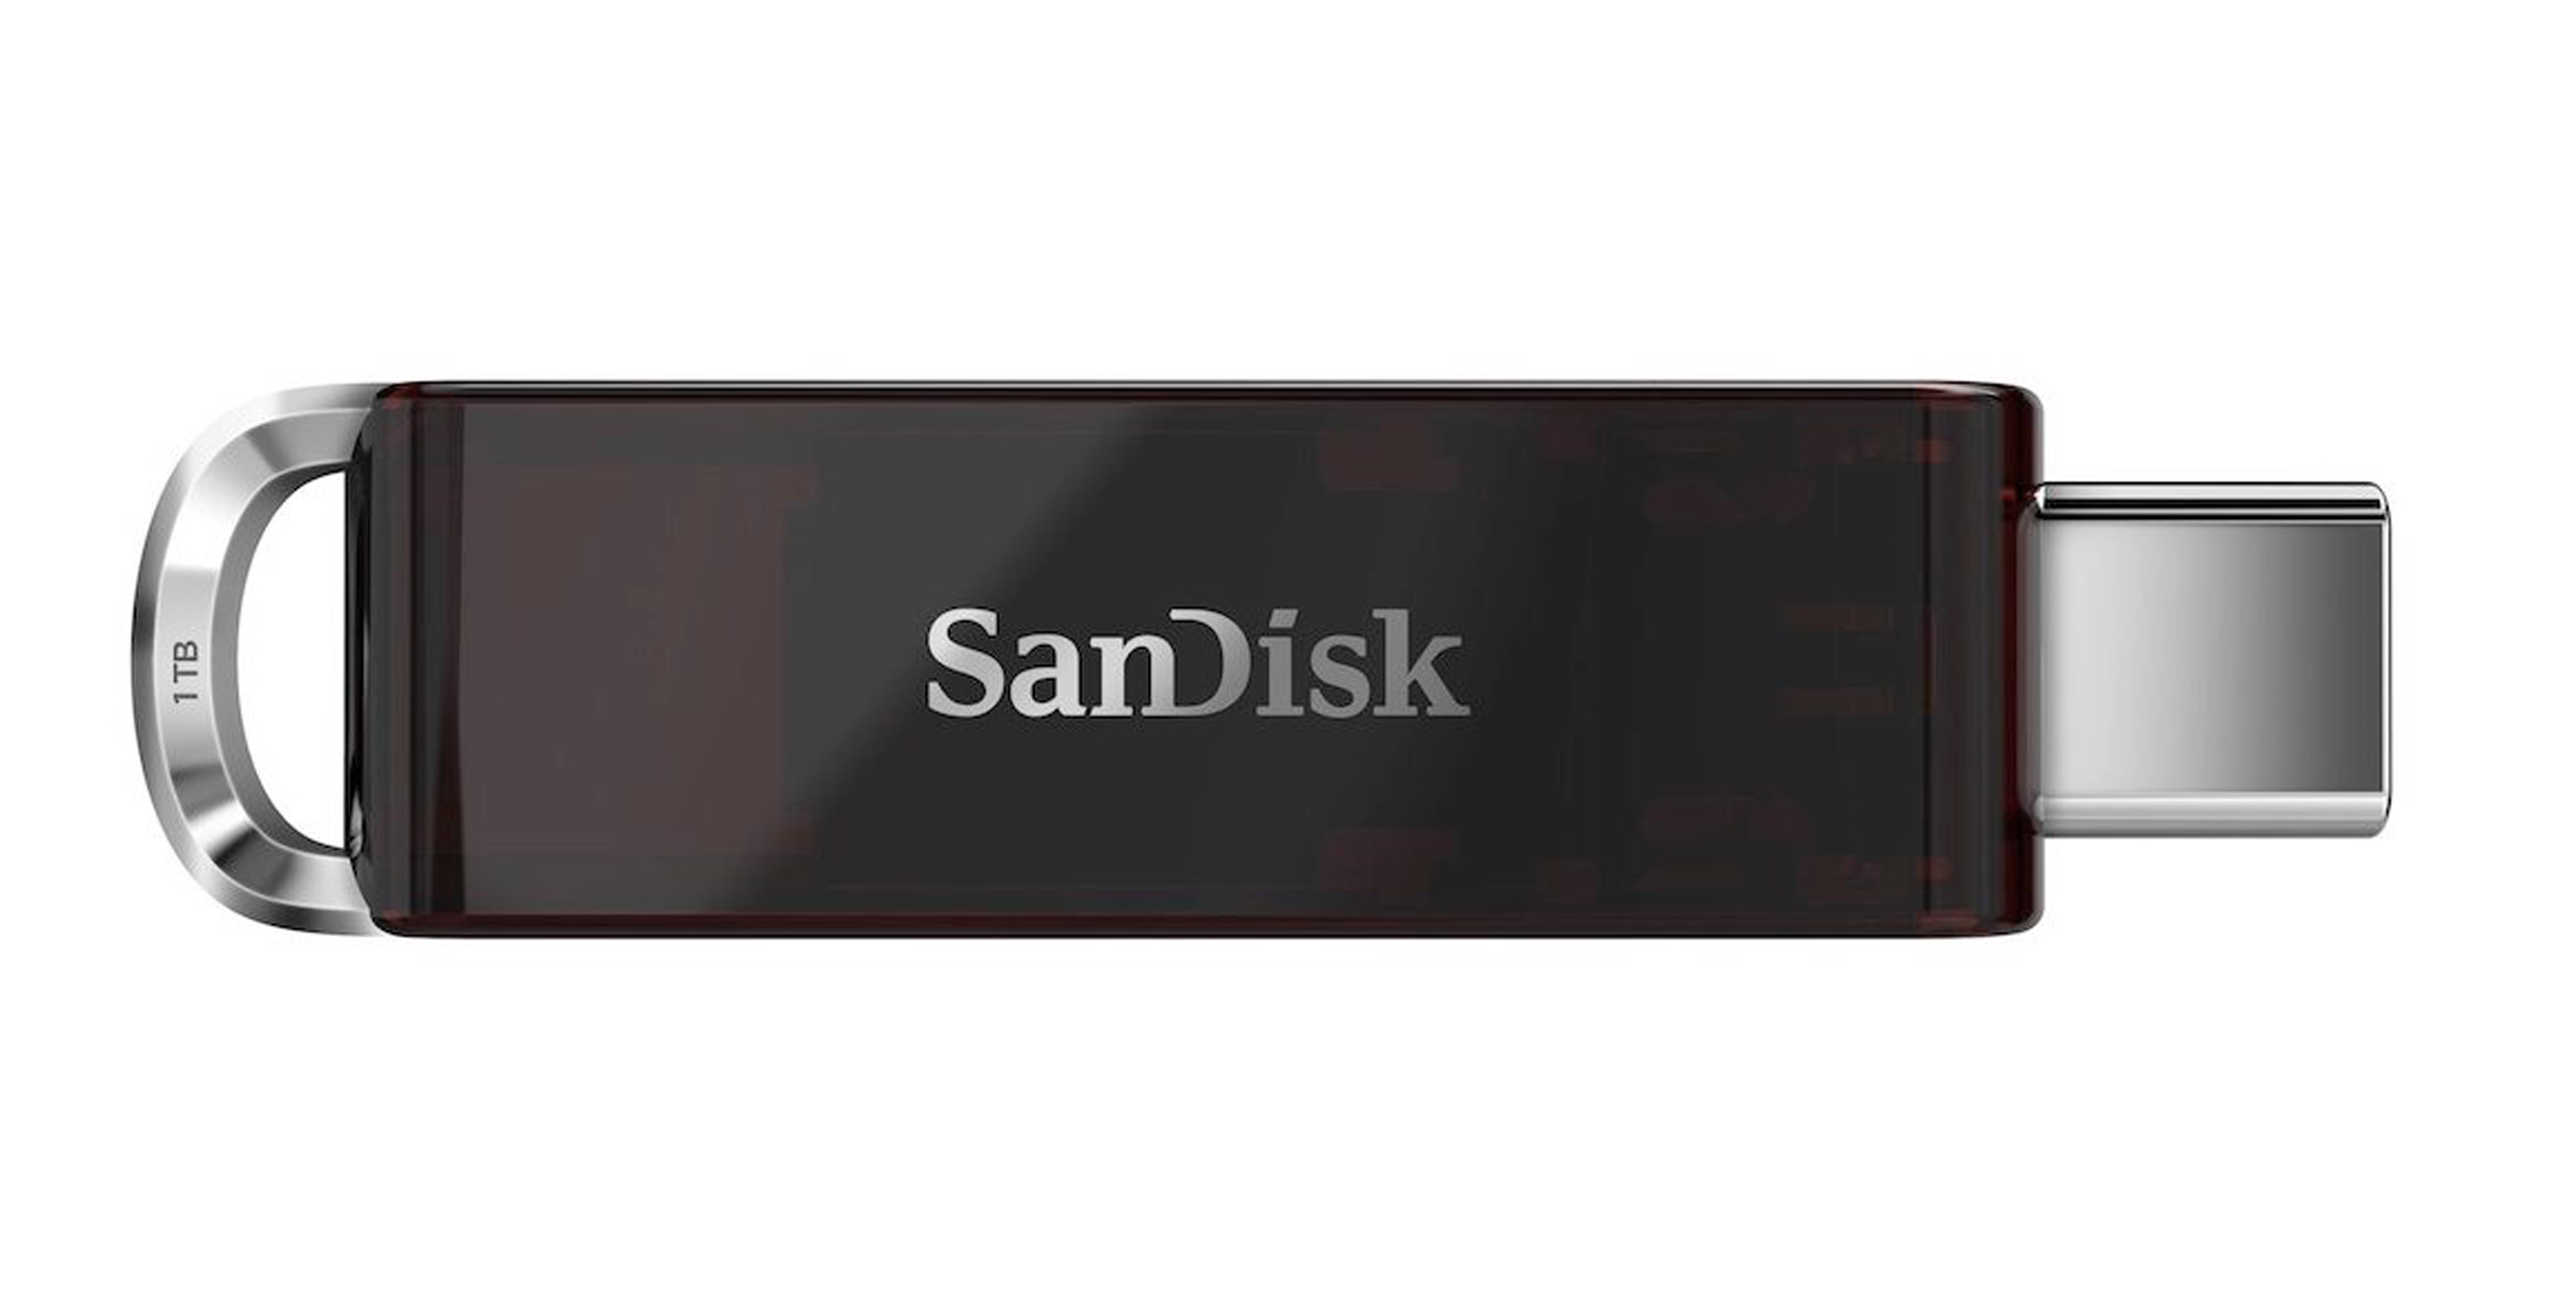 SanDisk's new 1TB thumb drive